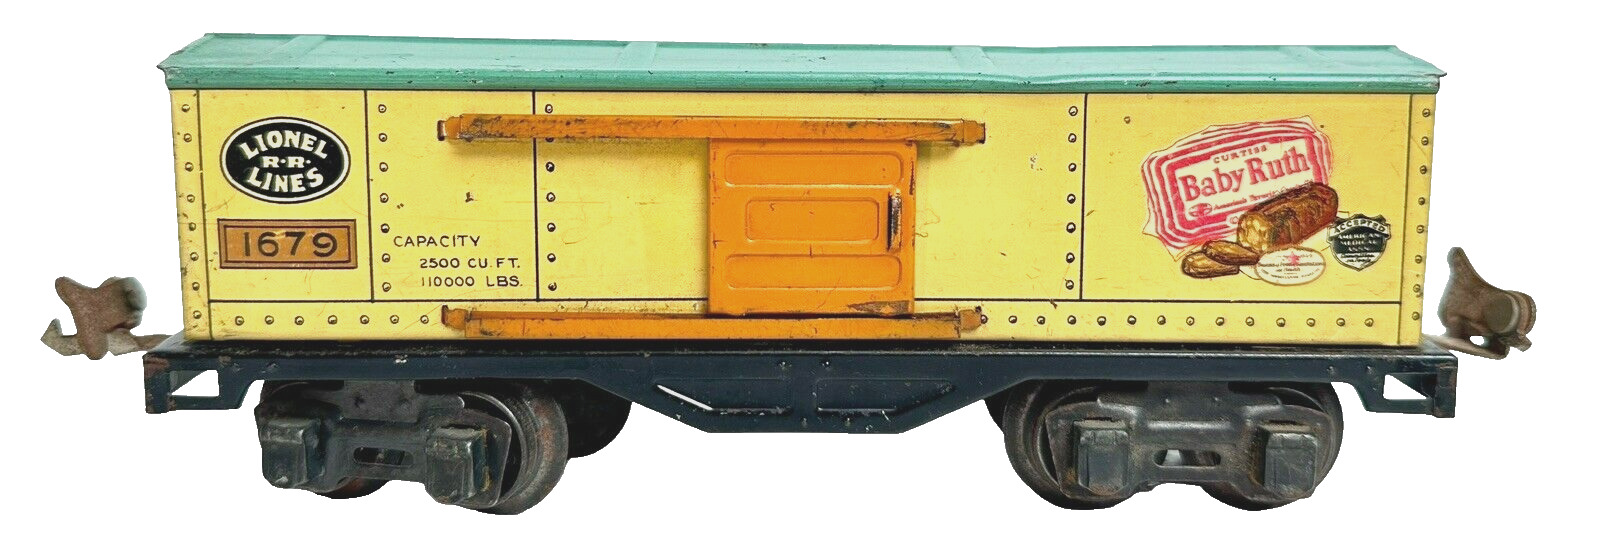 Vintage Lionel Lines 1679 Prewar O Gauge  Baby Ruth Candy Train Car